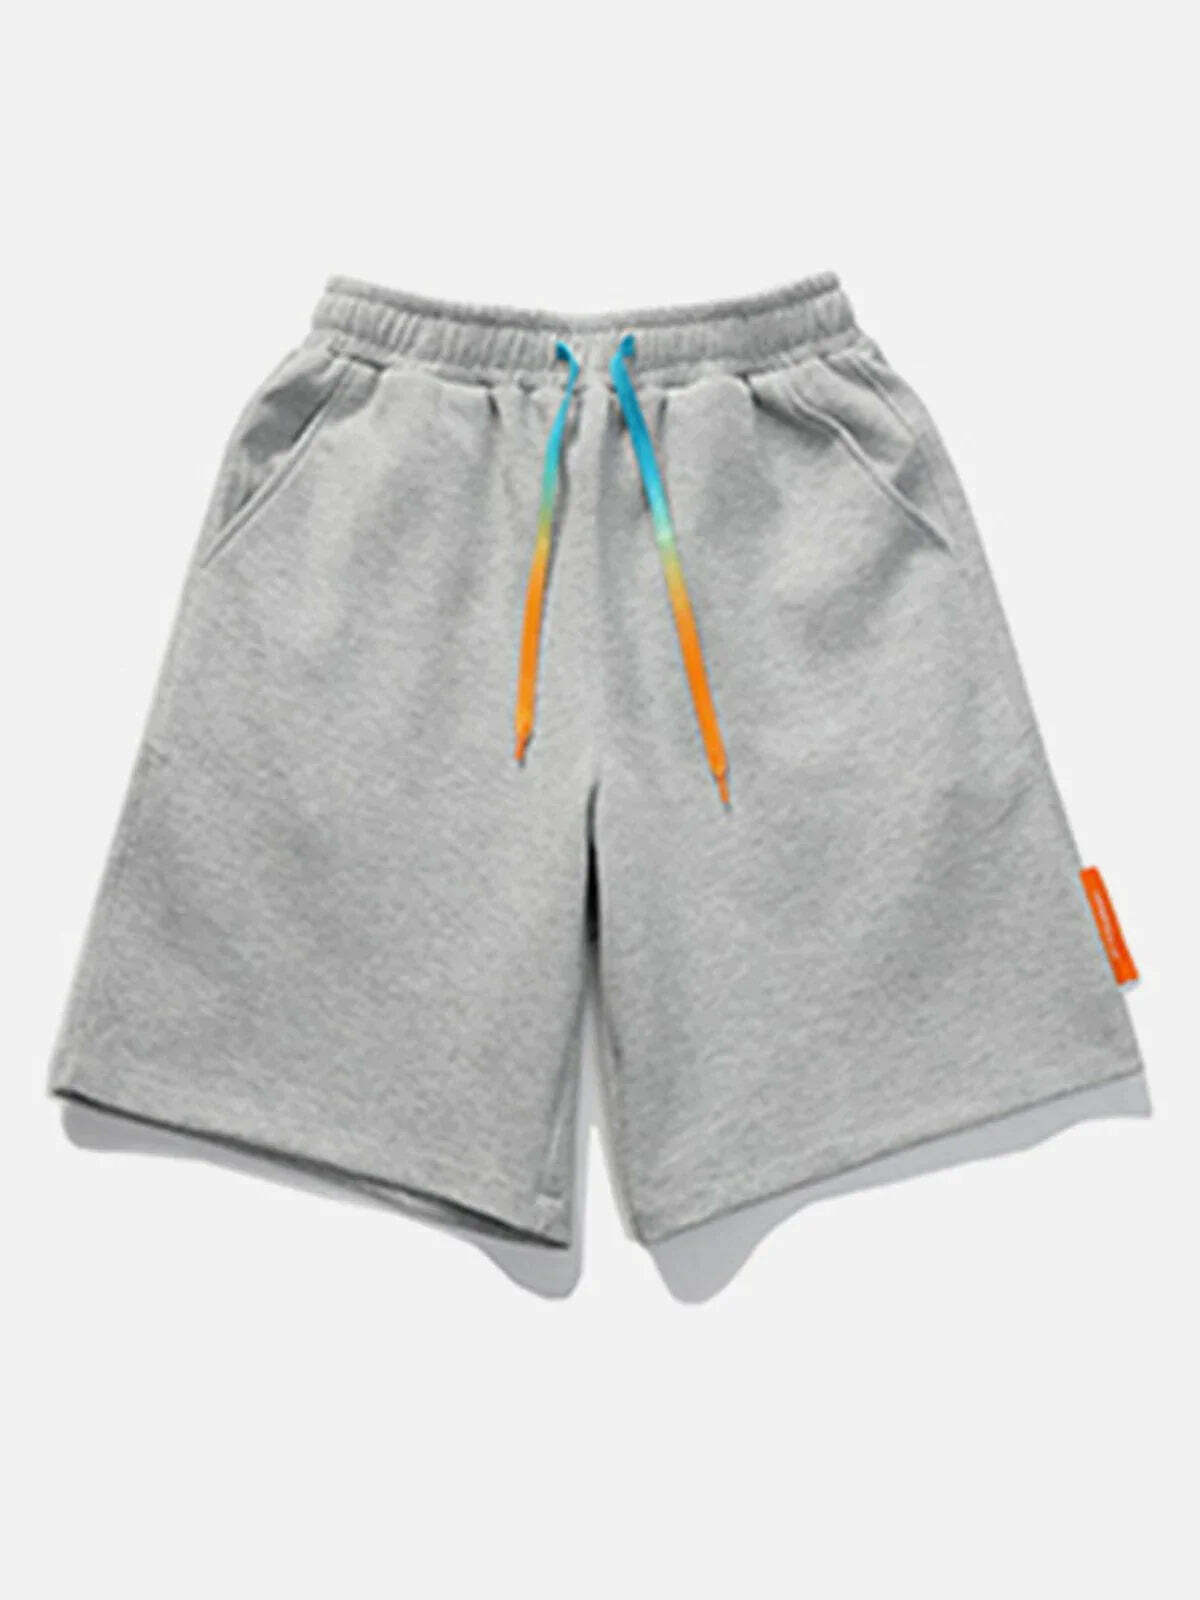 colored drawstring shorts youthful & custom design 6140